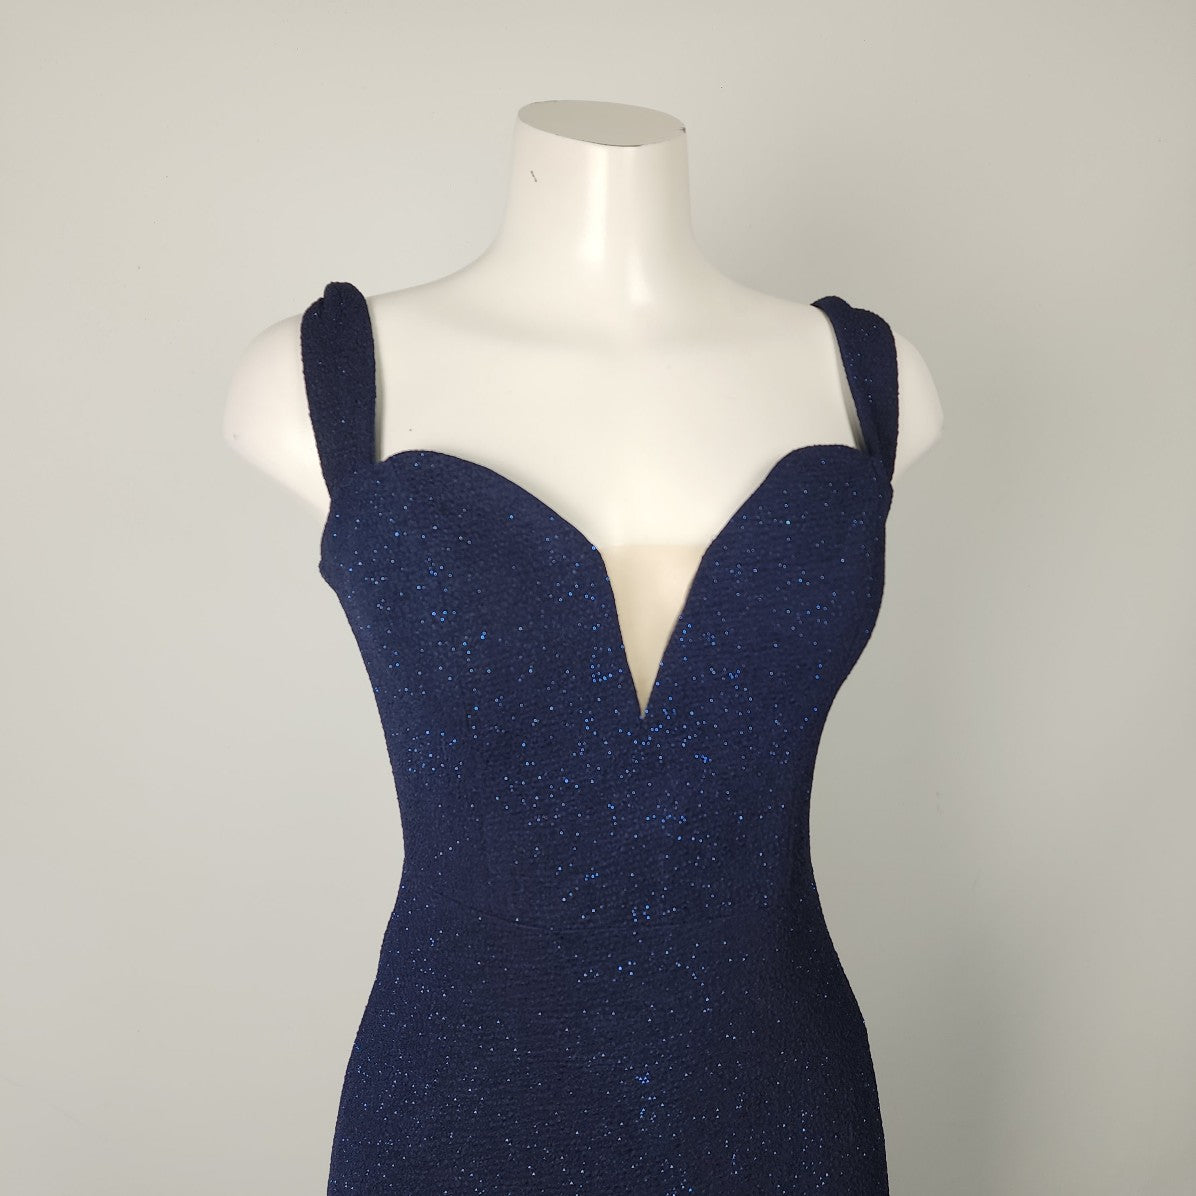 Tiffany Designs Navy Metallic Eventwear Gown Size 6